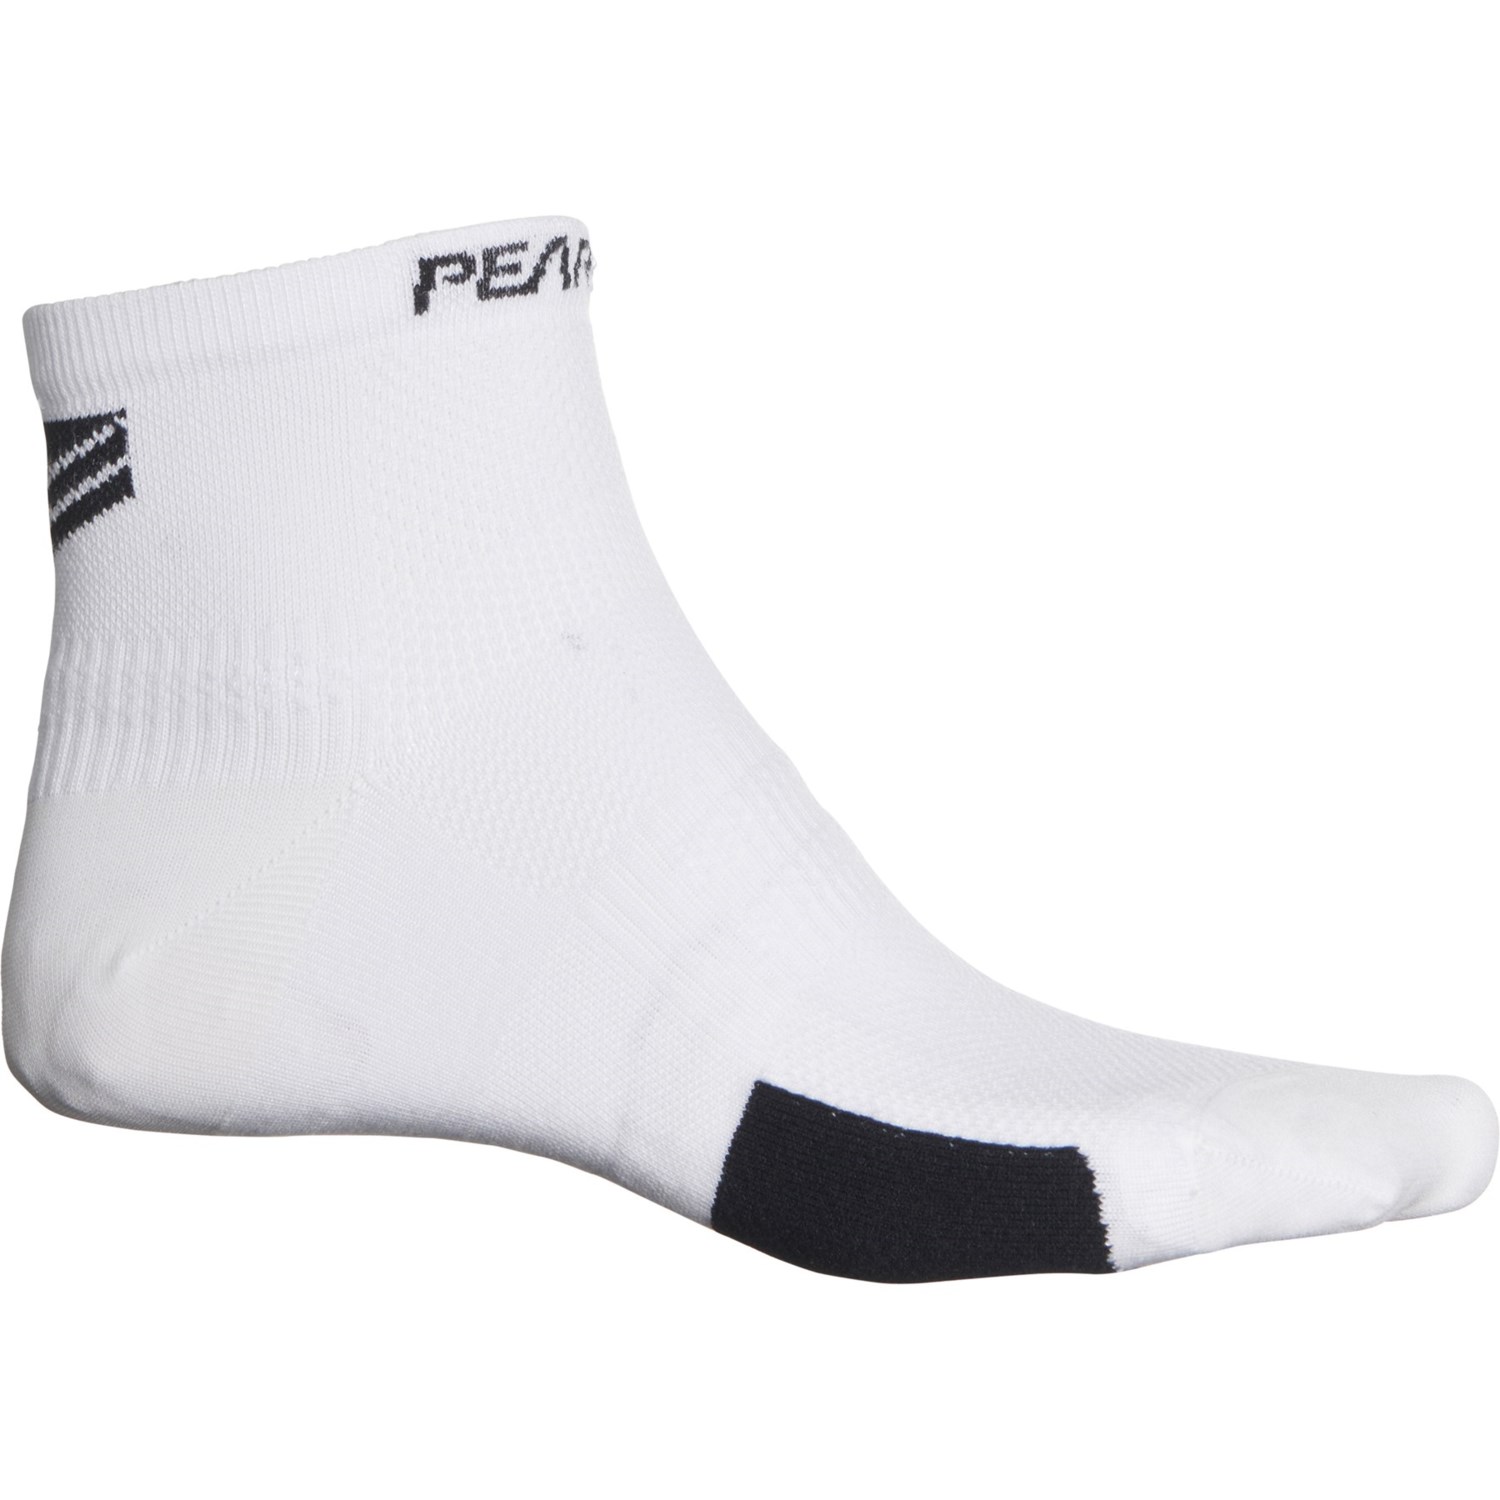 Pearl Izumi ELITE Low Cycling Socks - Ankle (For Men)